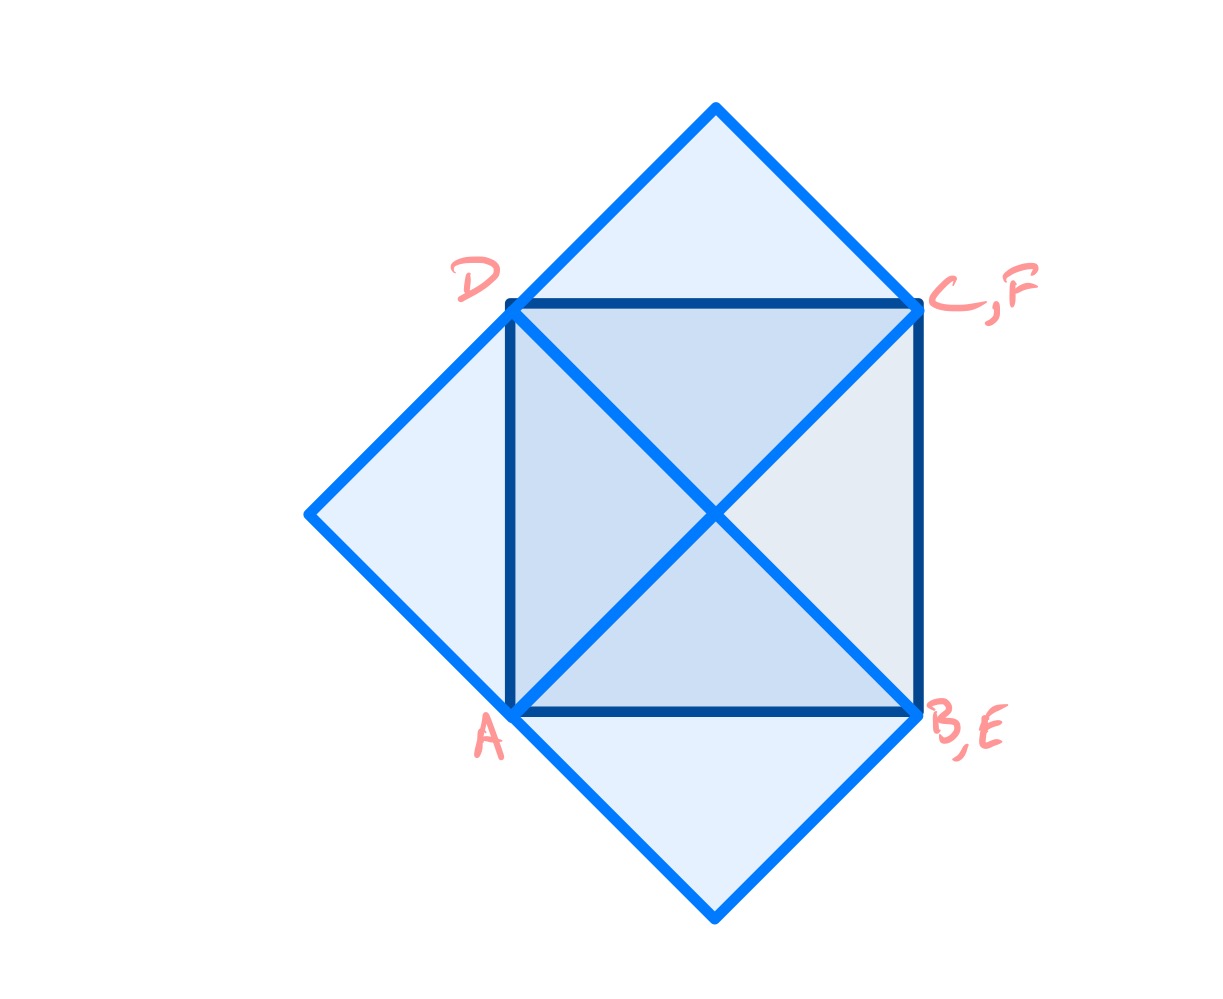 Four squares iv extreme case B